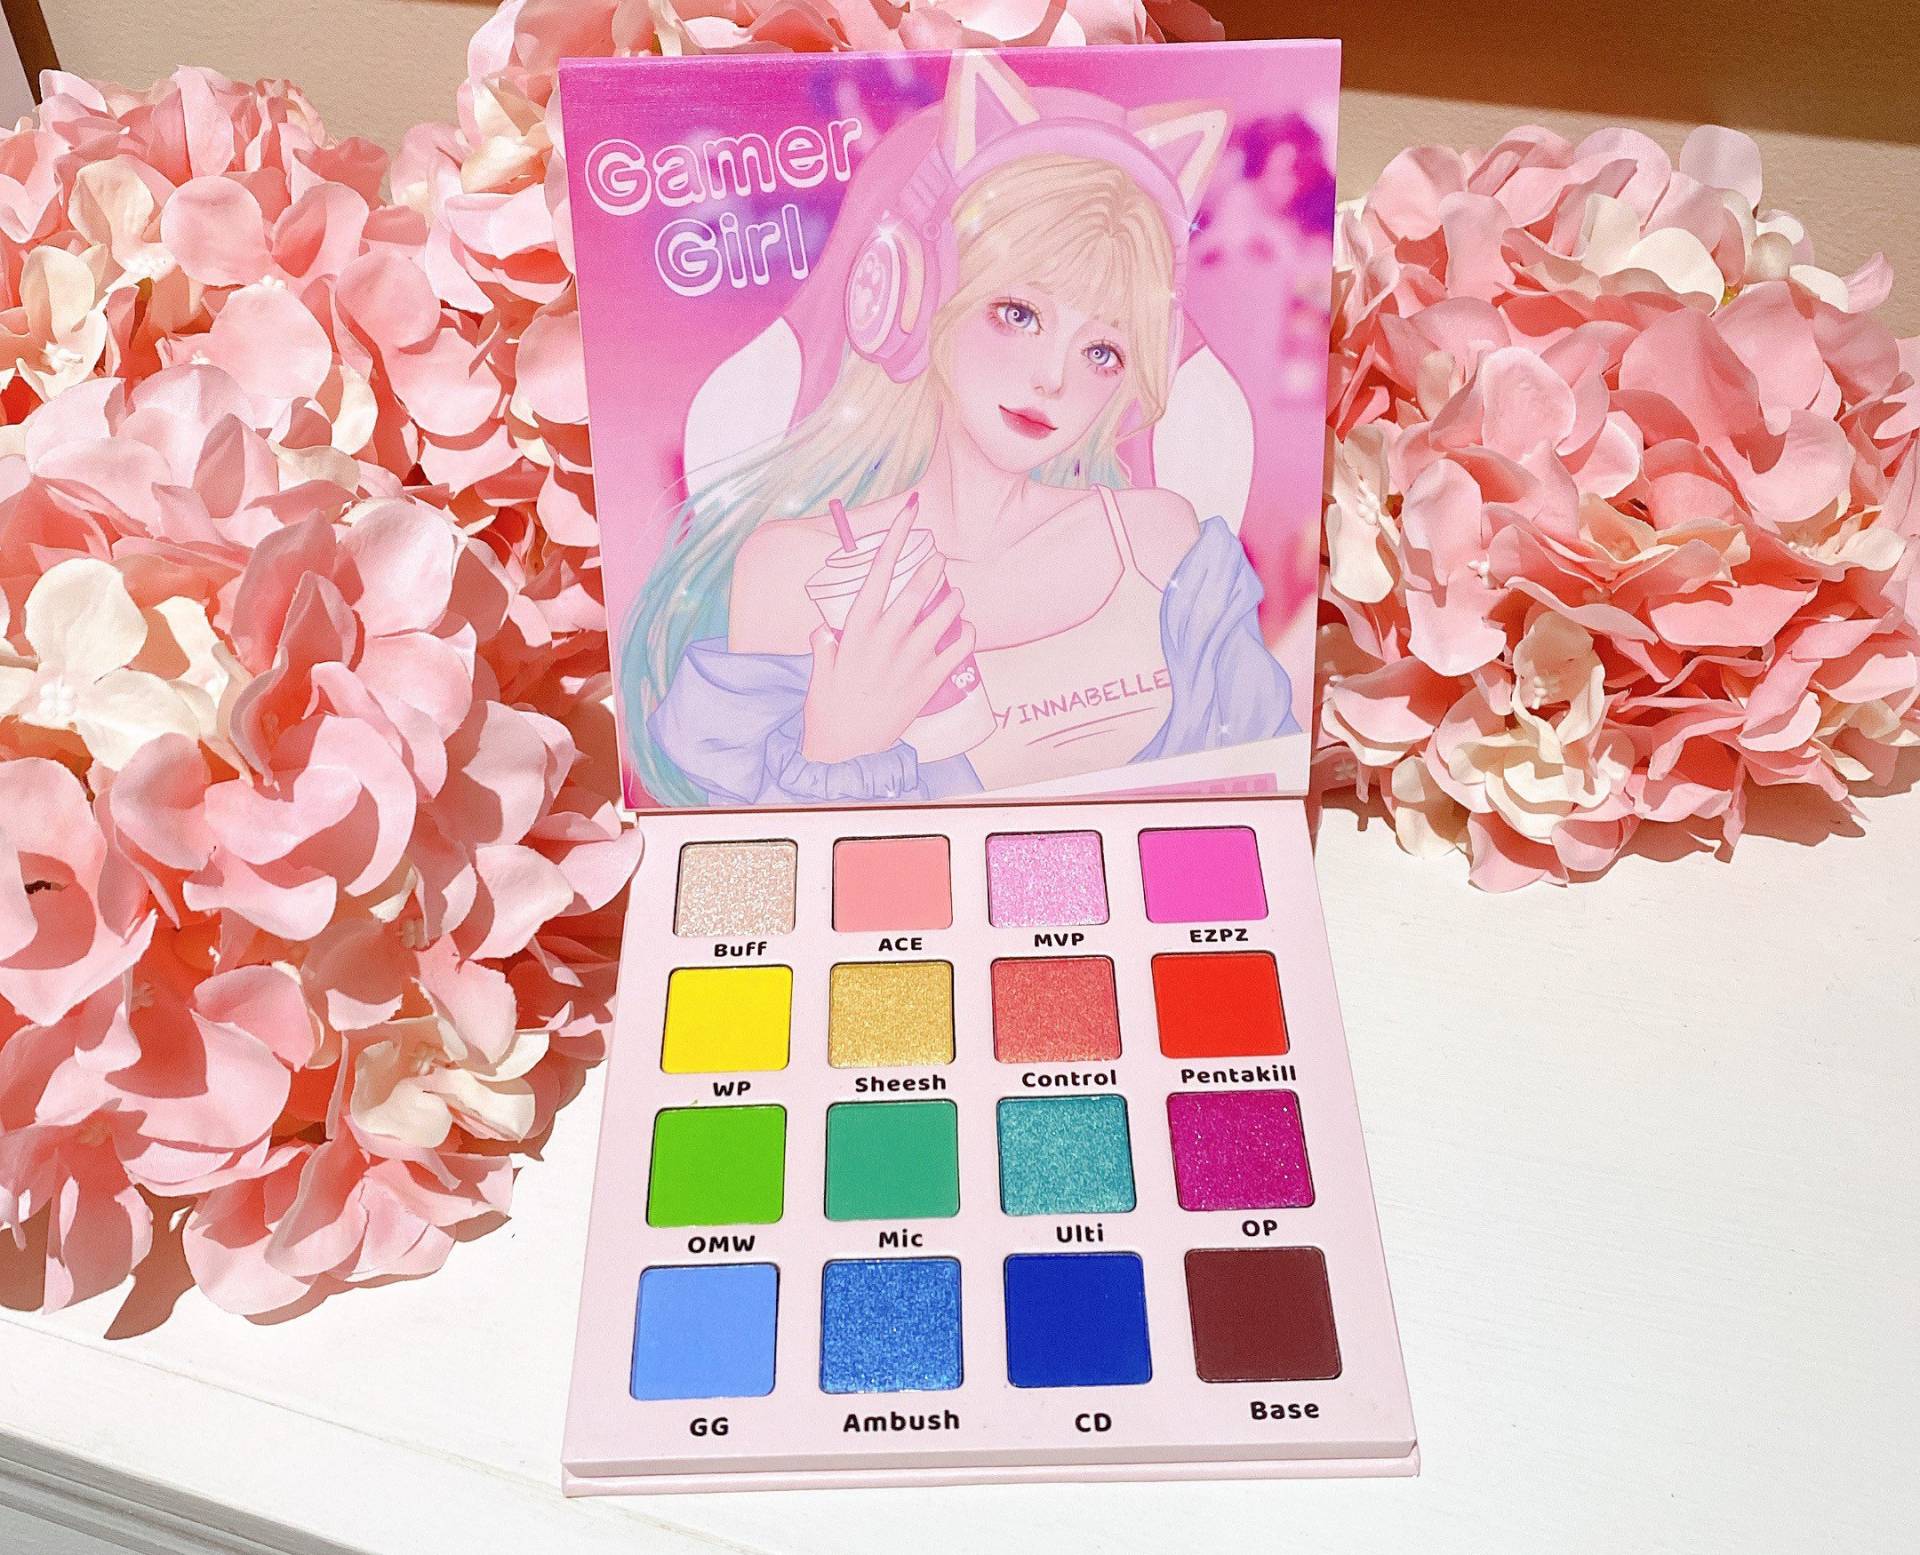 Gamer Girl Anime Regenbogen Lidschatten Palette von Yinnabelle